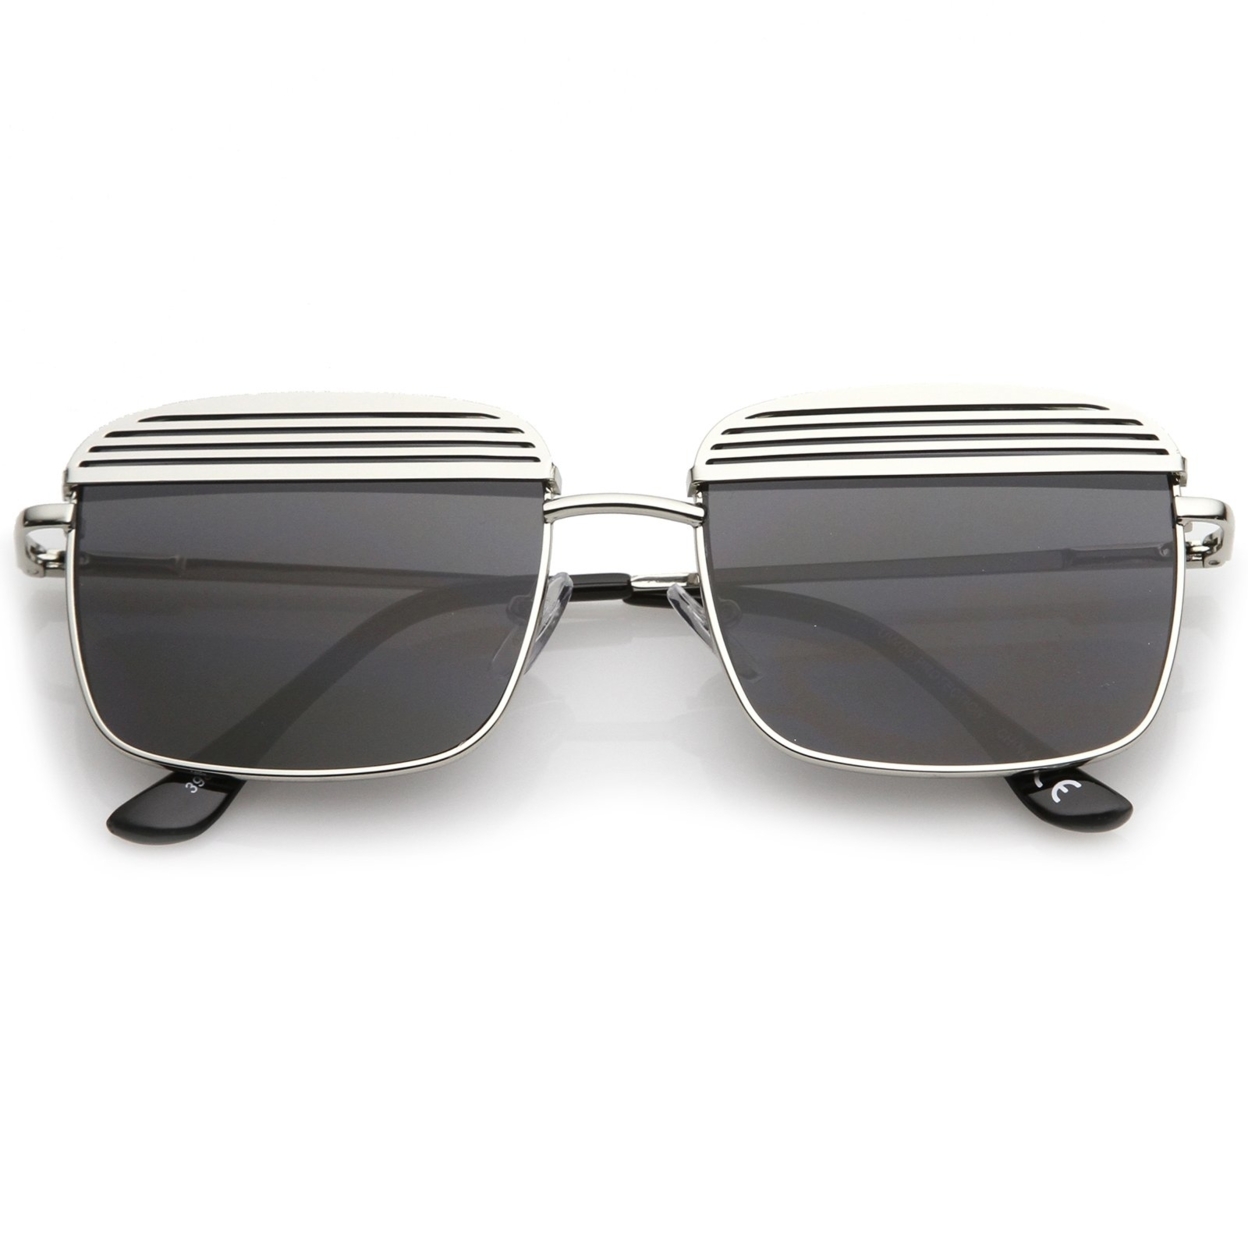 Modern Ultra Slim Arms Metal Cover Super Flat Lens Square Sunglasses 53mm - Matte Black / Smoke